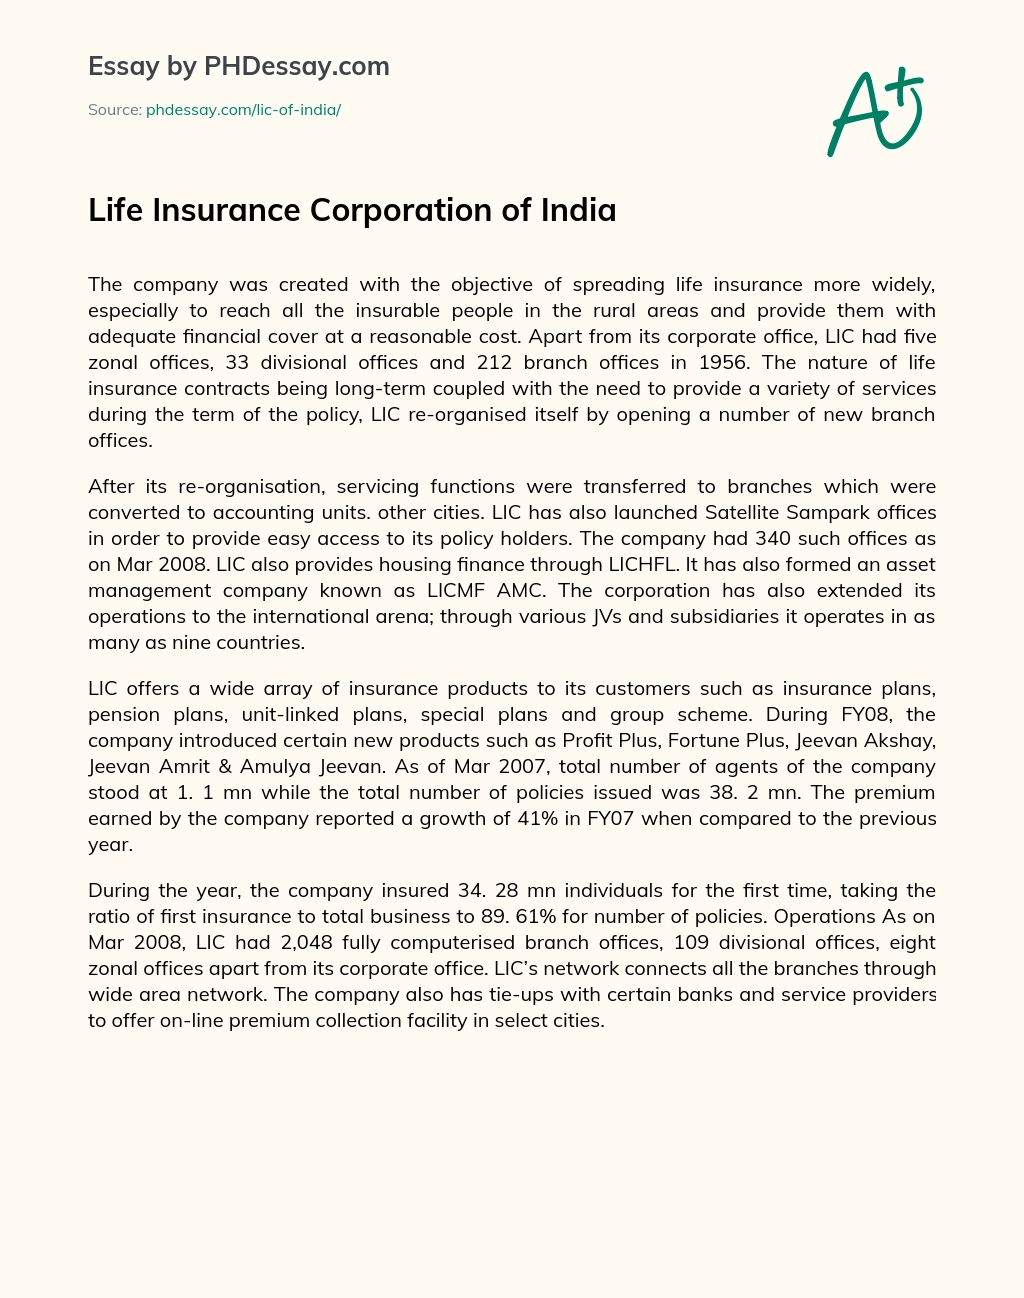 Life Insurance Corporation of India essay